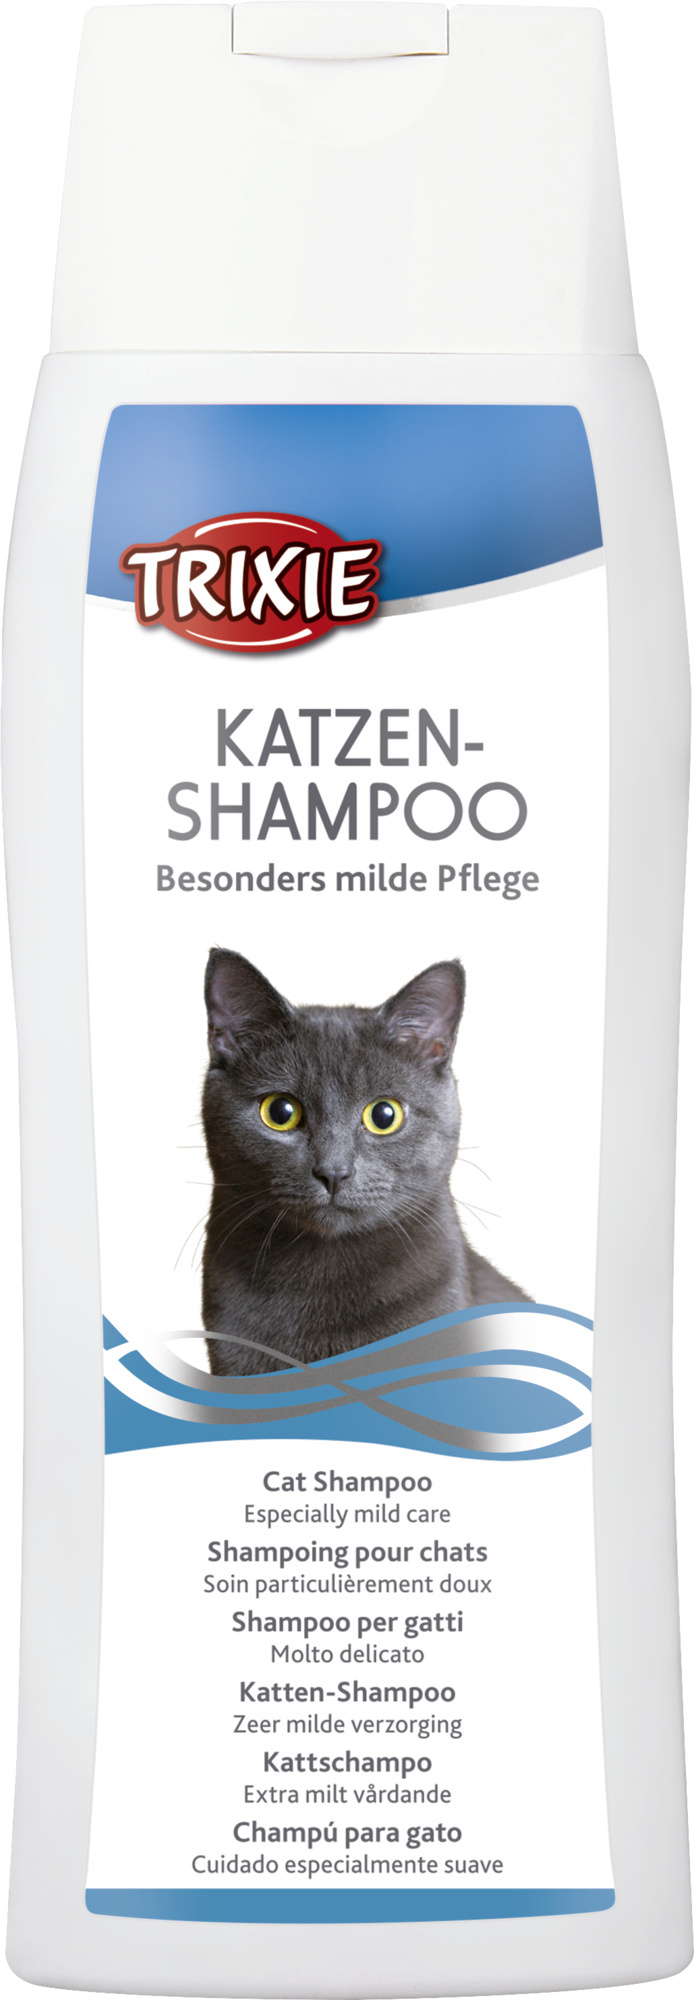 Grafiek Harmonisch ondergronds Katten-Shampoo - Junai.nl